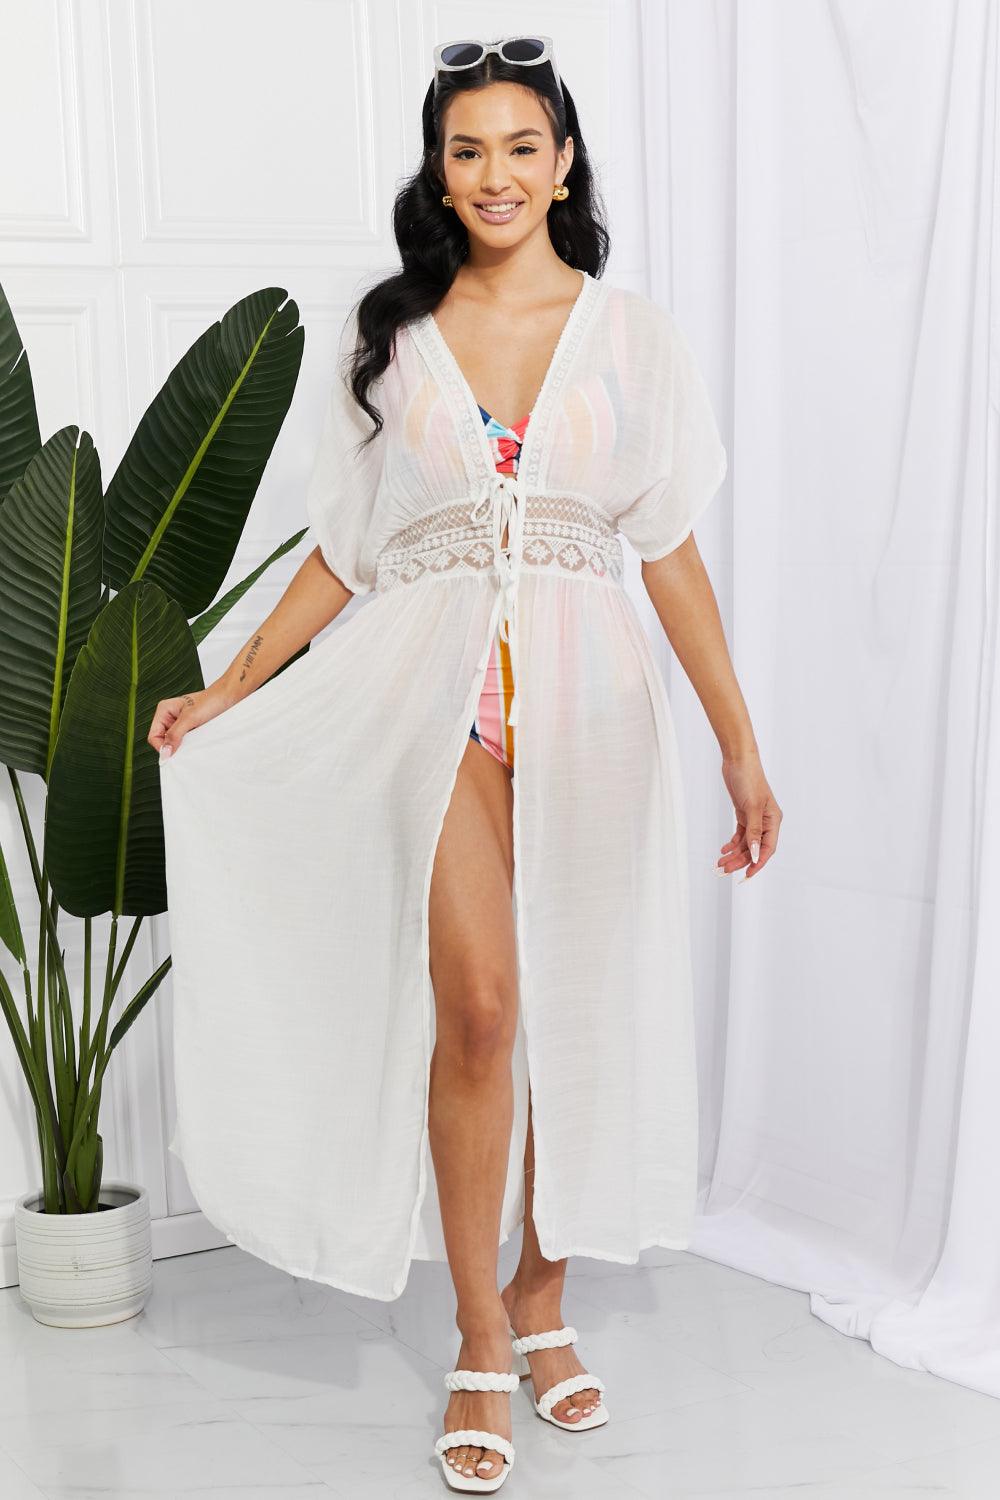 Marina West Swim Sun Goddess Tied Maxi Cover-Up - Laguna Looks